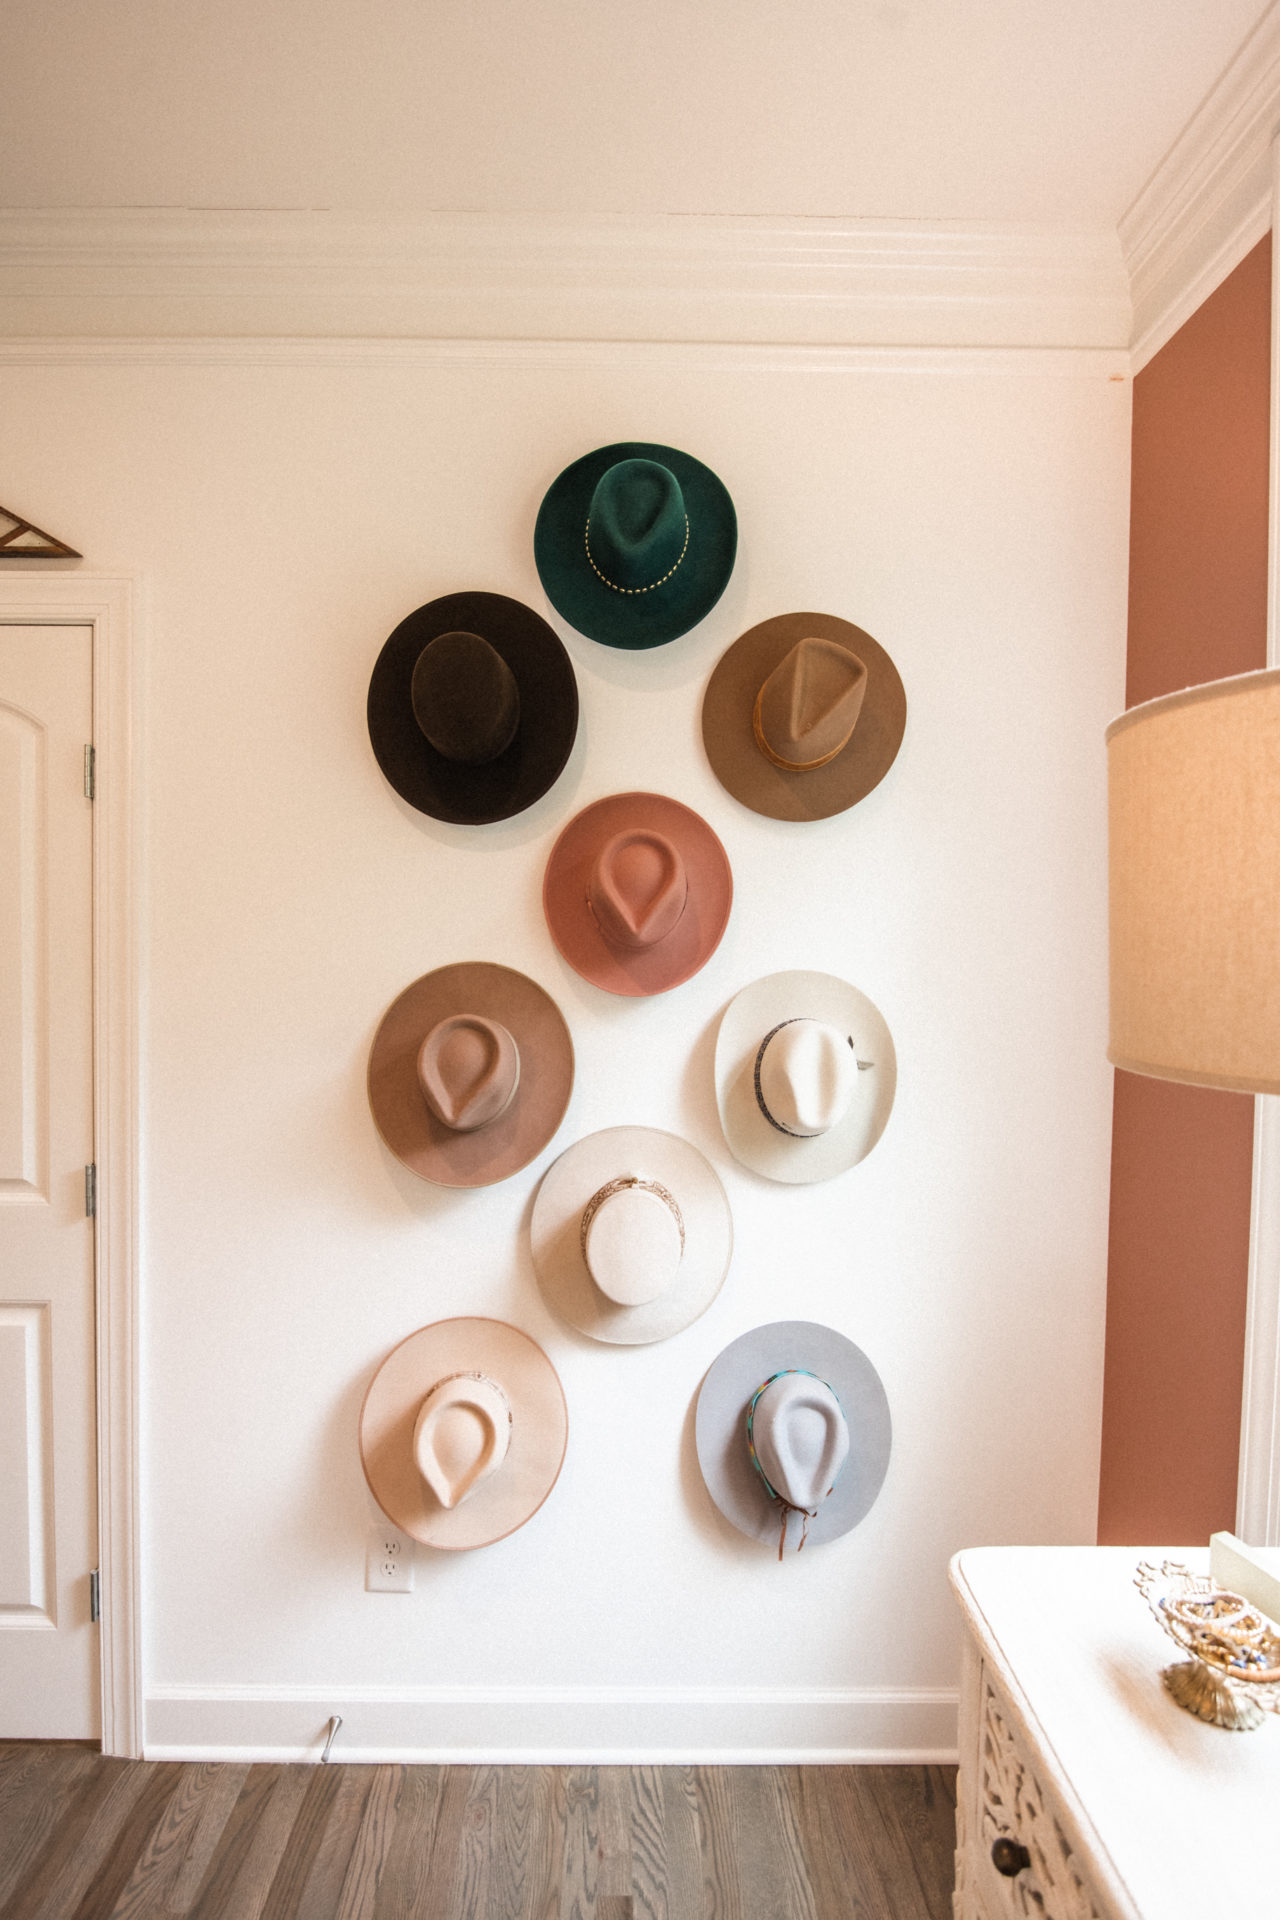 hat wall inspiration